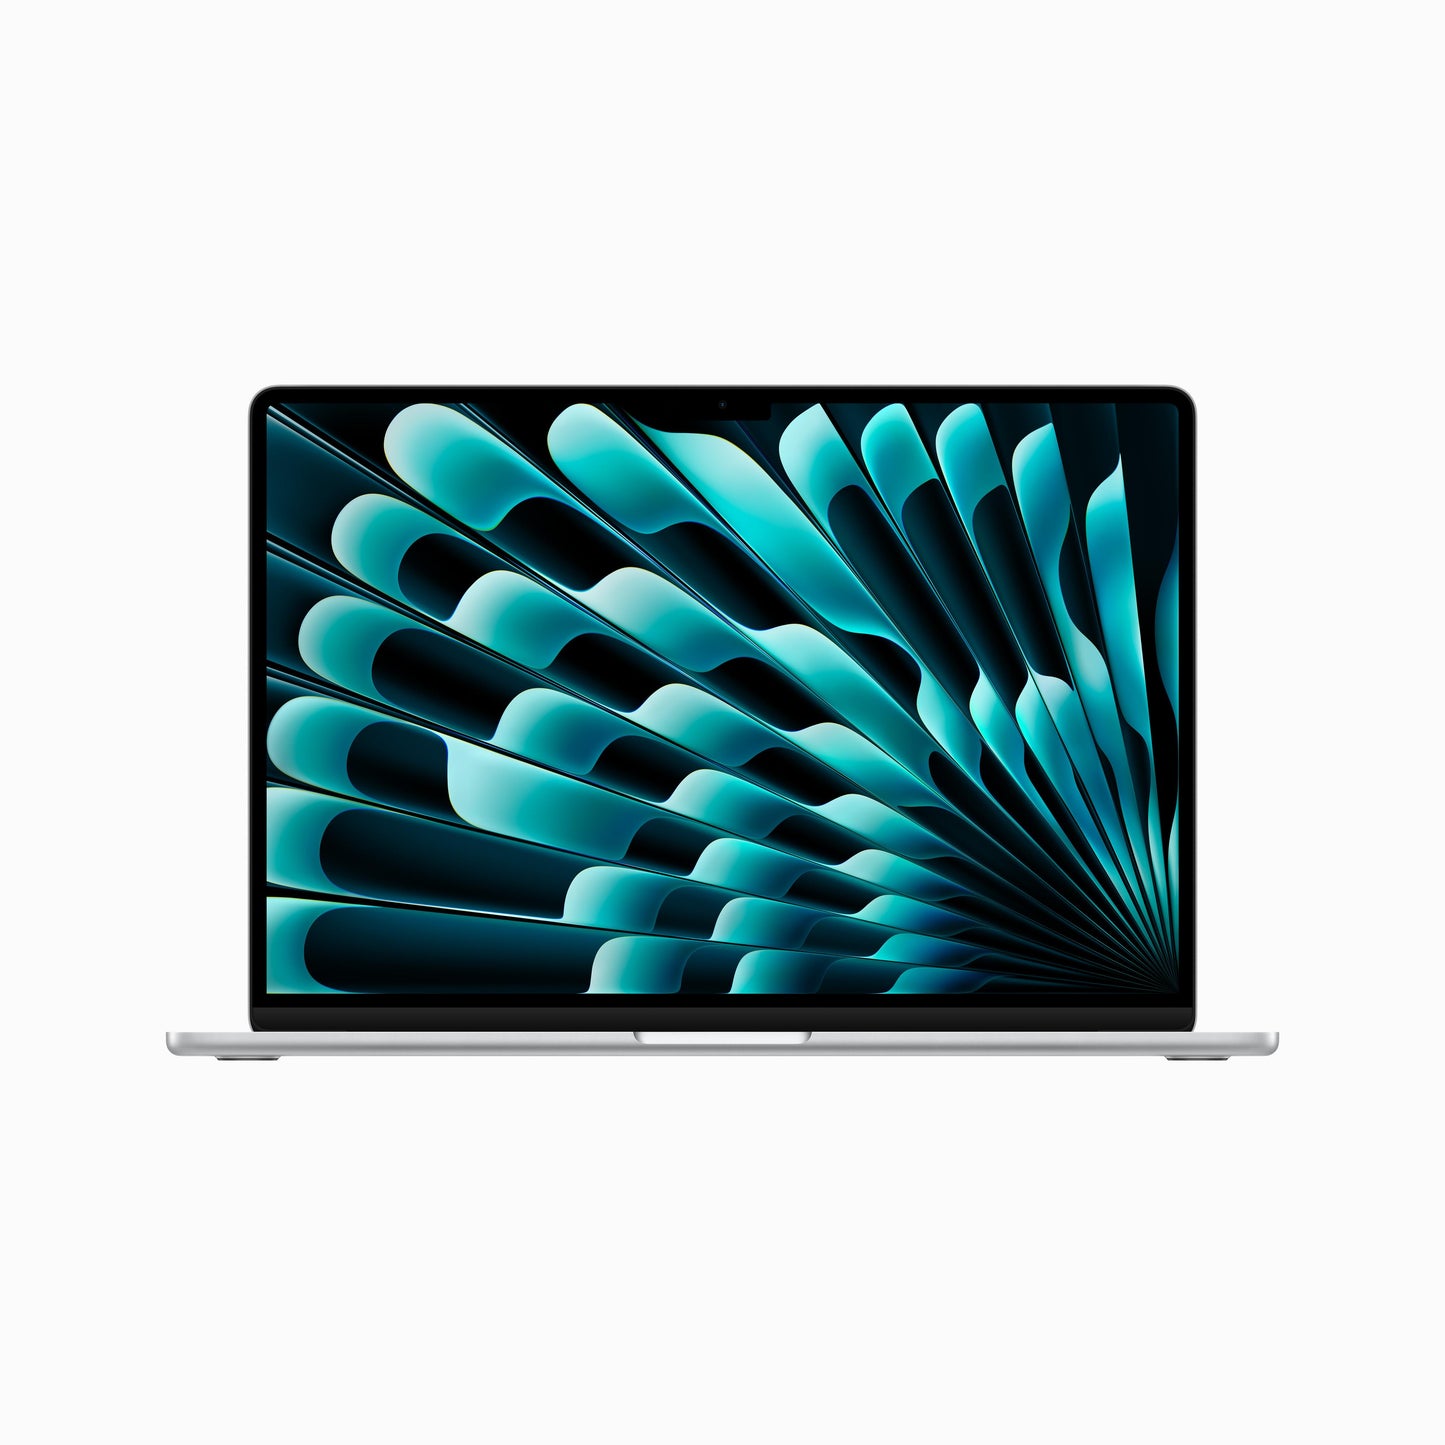 15-inch MacBook Air: Apple M2 chip with 8-core CPU and 10-core GPU, 256GB SSD - Silver